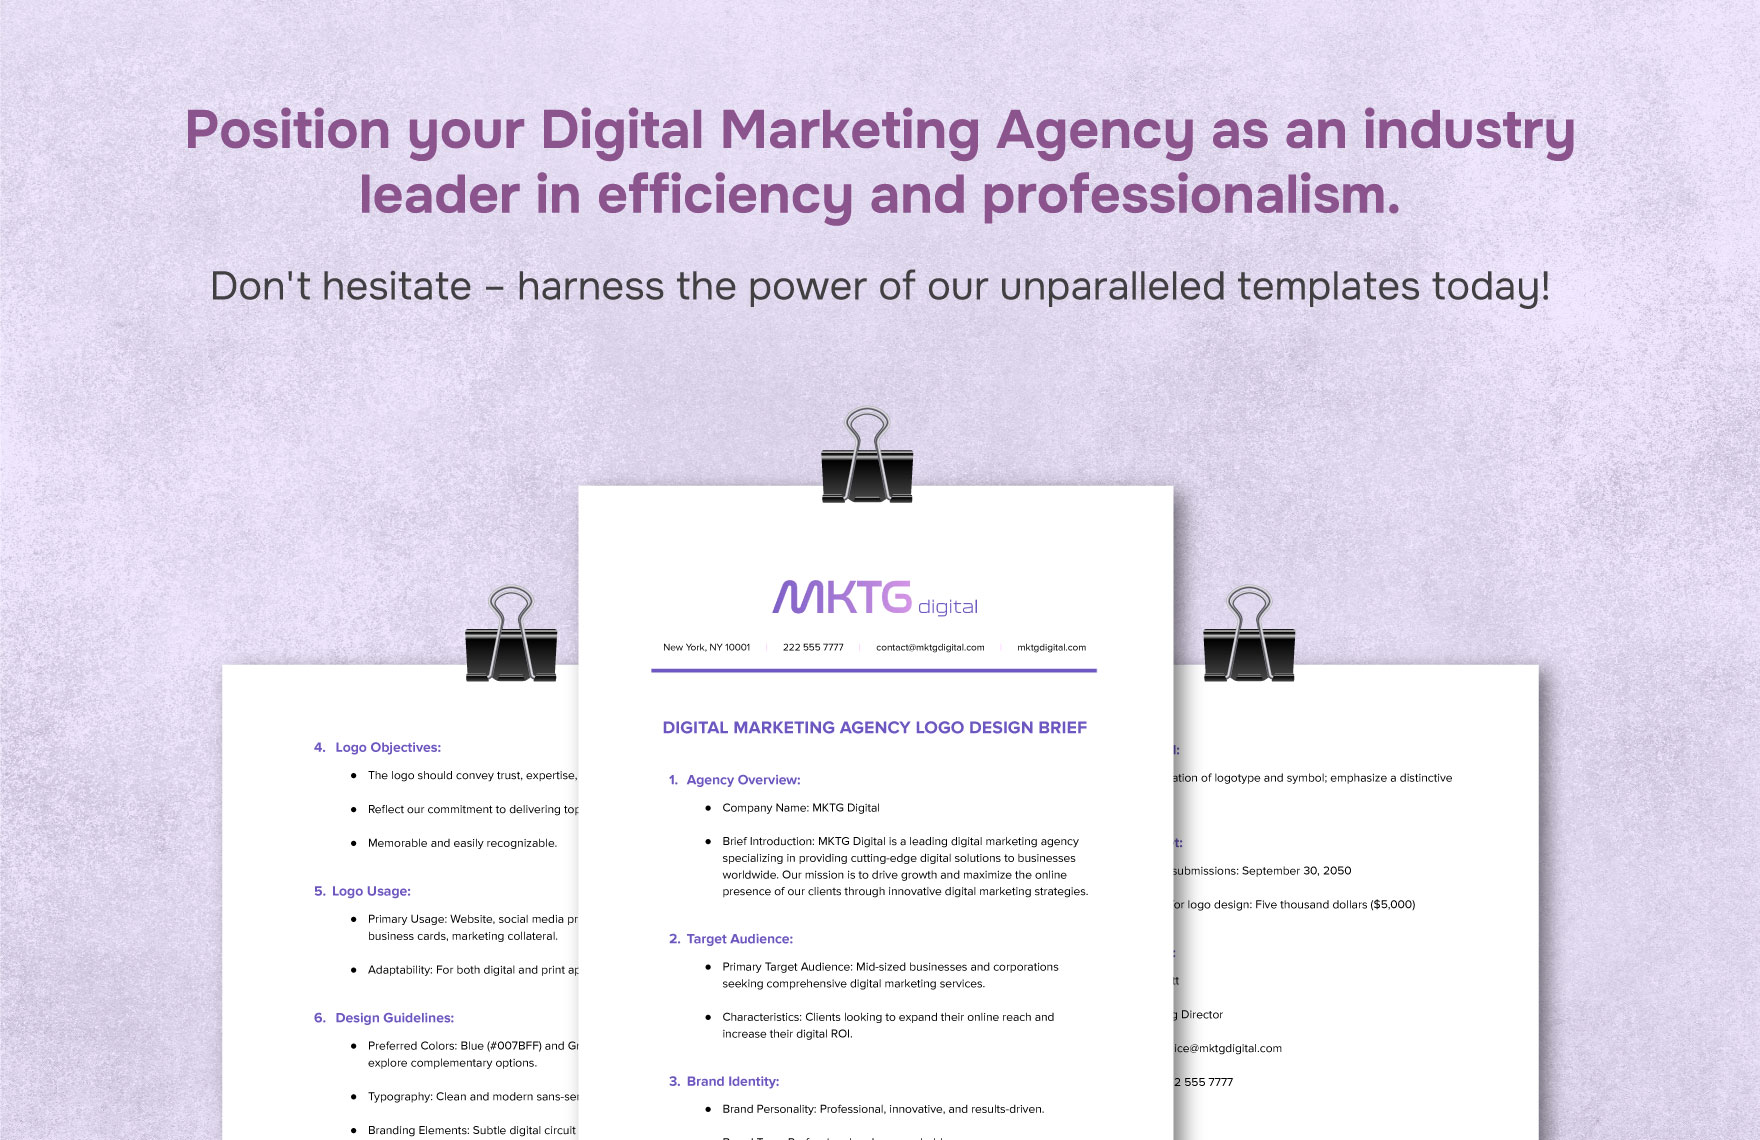 Digital Marketing Agency Logo Design Brief Template